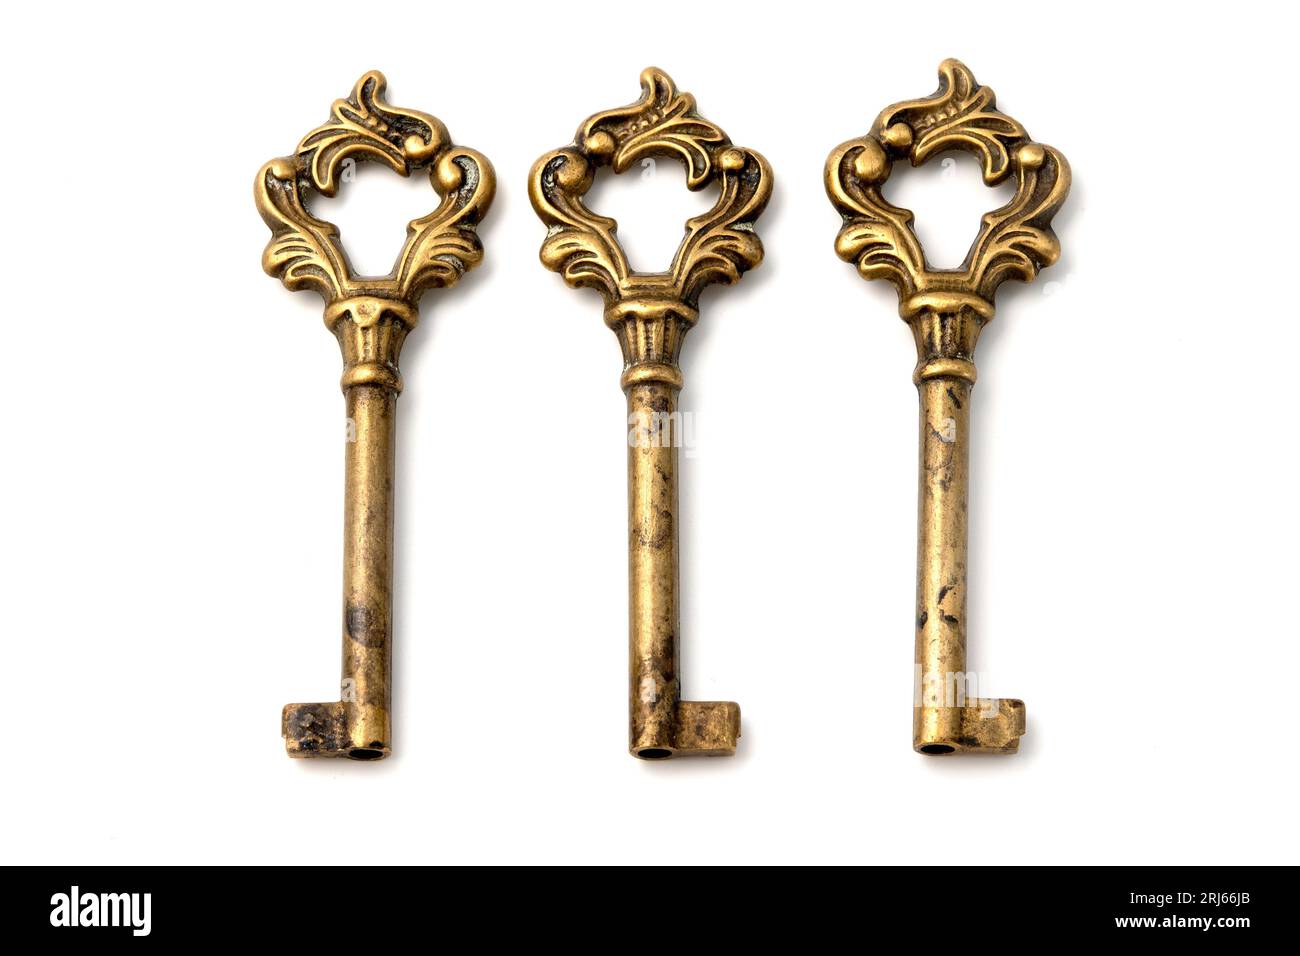 Ornate keys on a white background Stock Photo